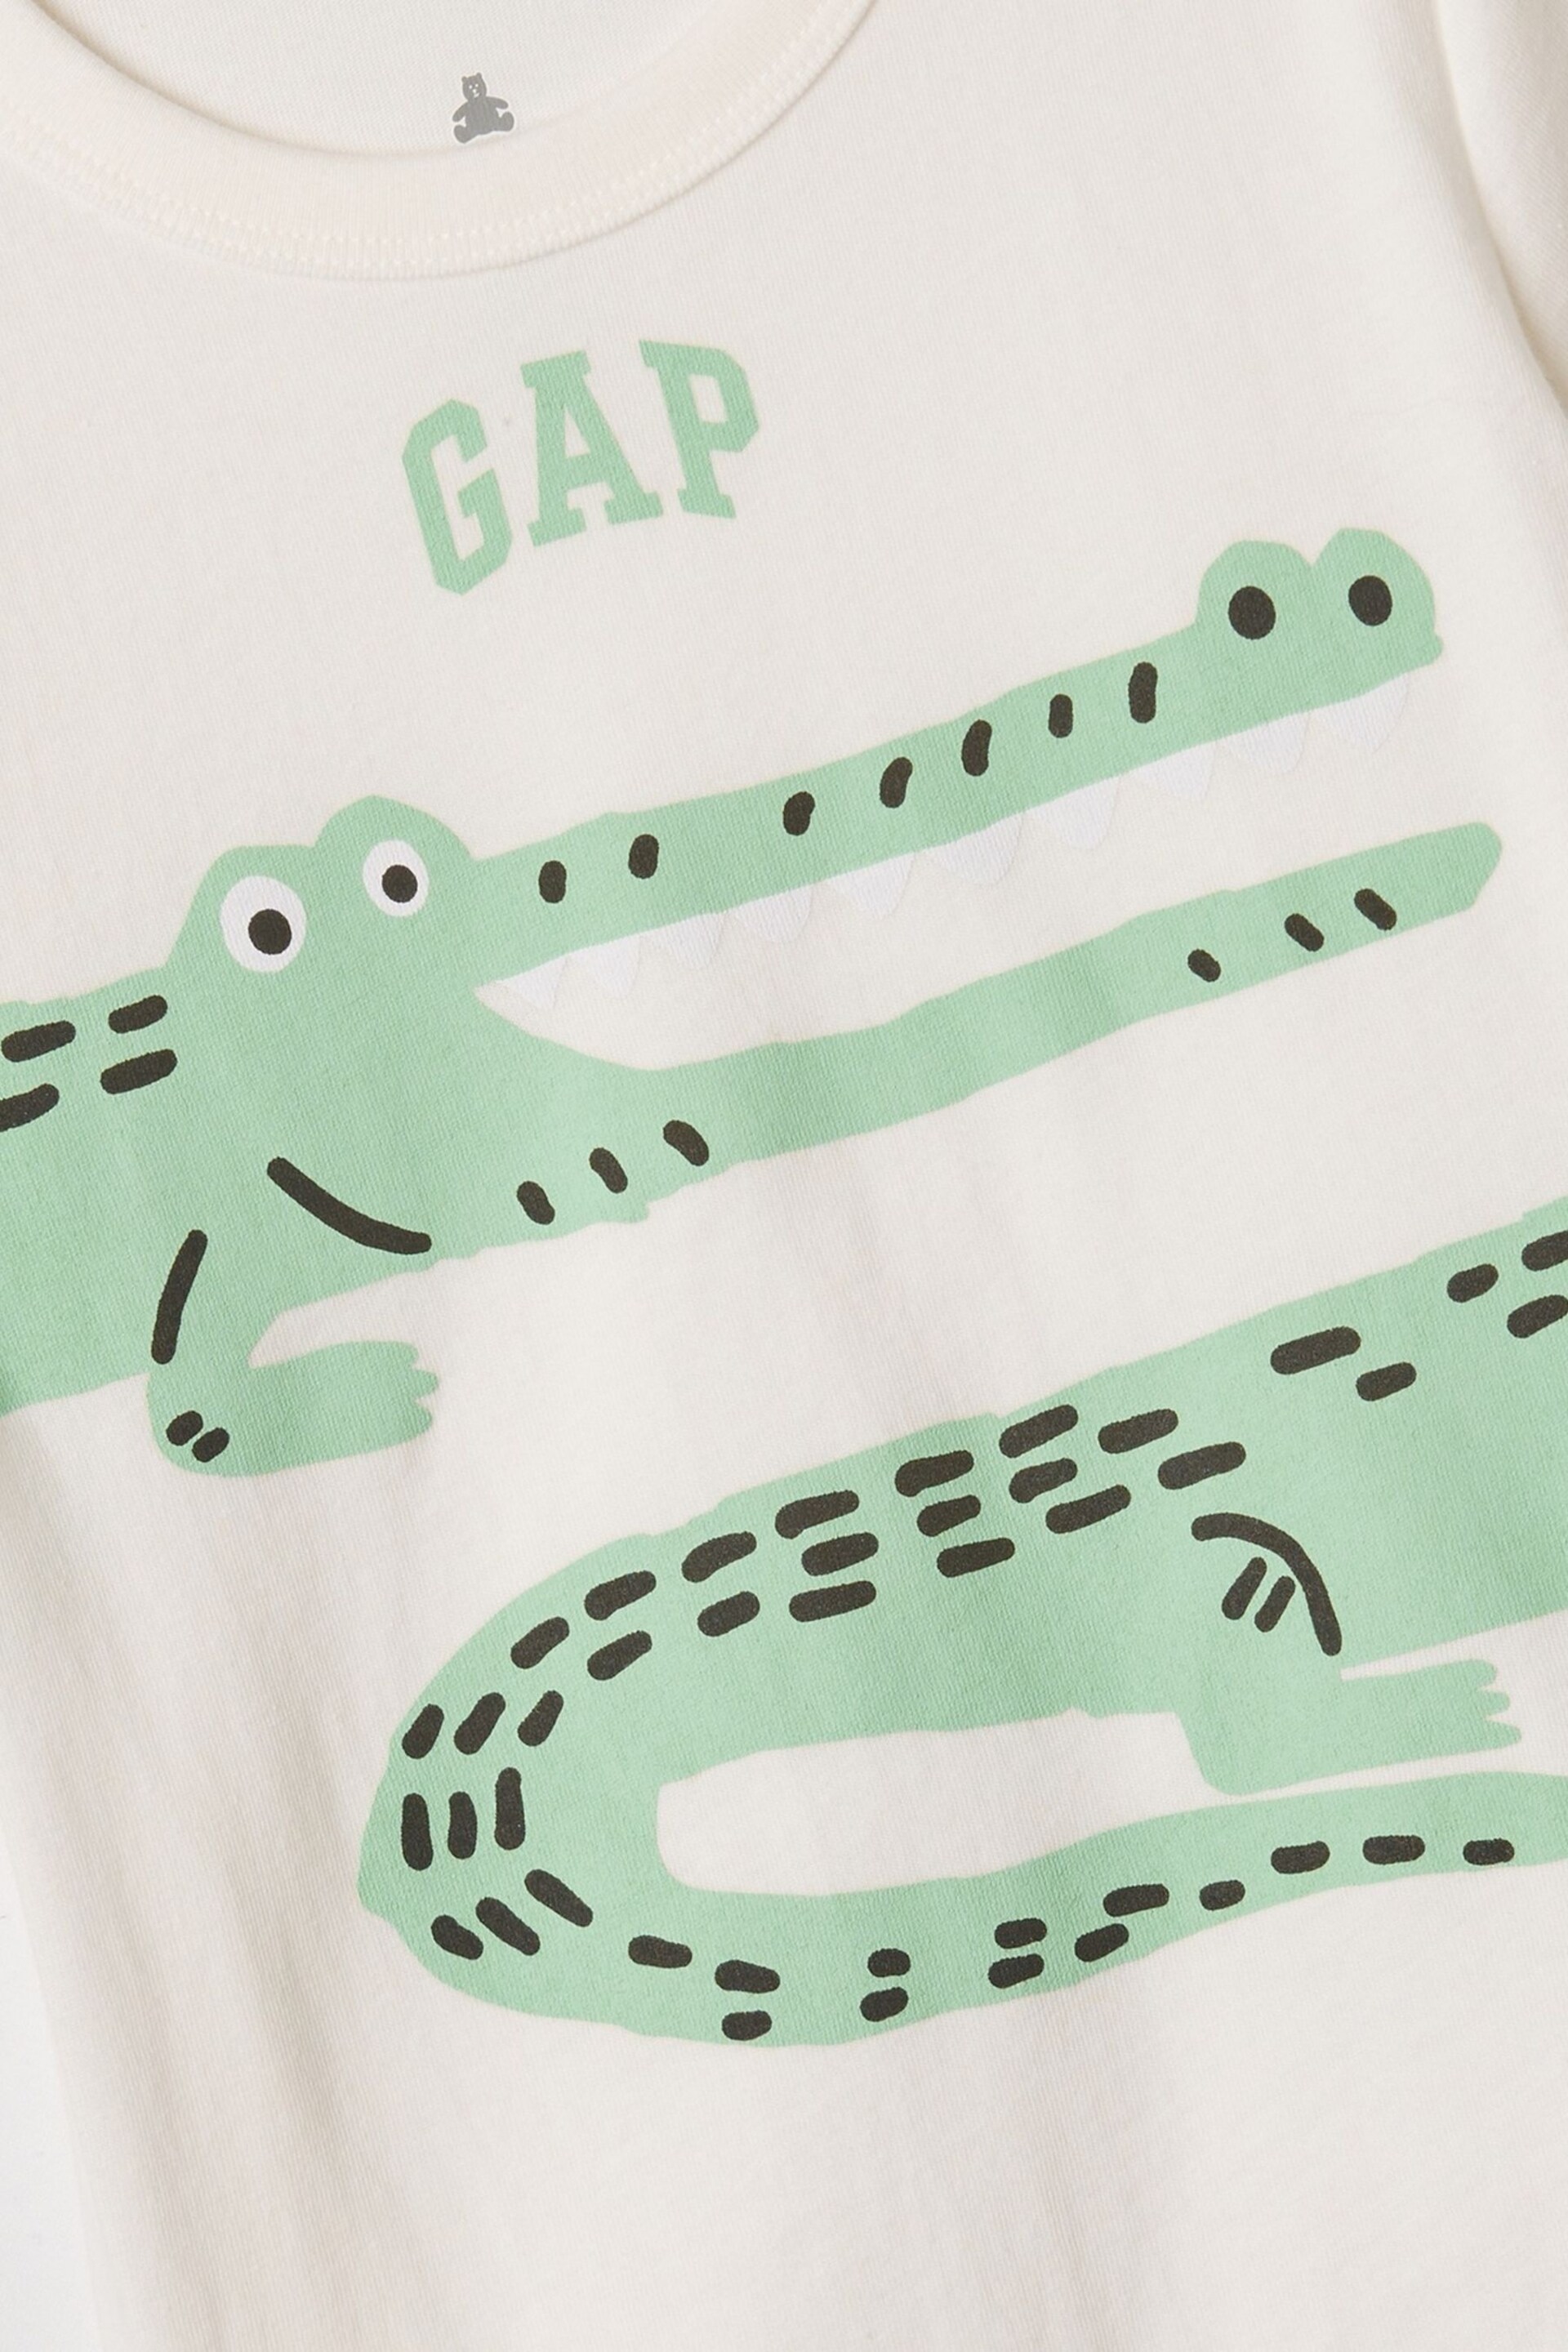 Gap Cream Crocodile Graphic Logo Short Sleeve Crew Neck T-Shirt (Newborn-5yrs) - Image 3 of 3